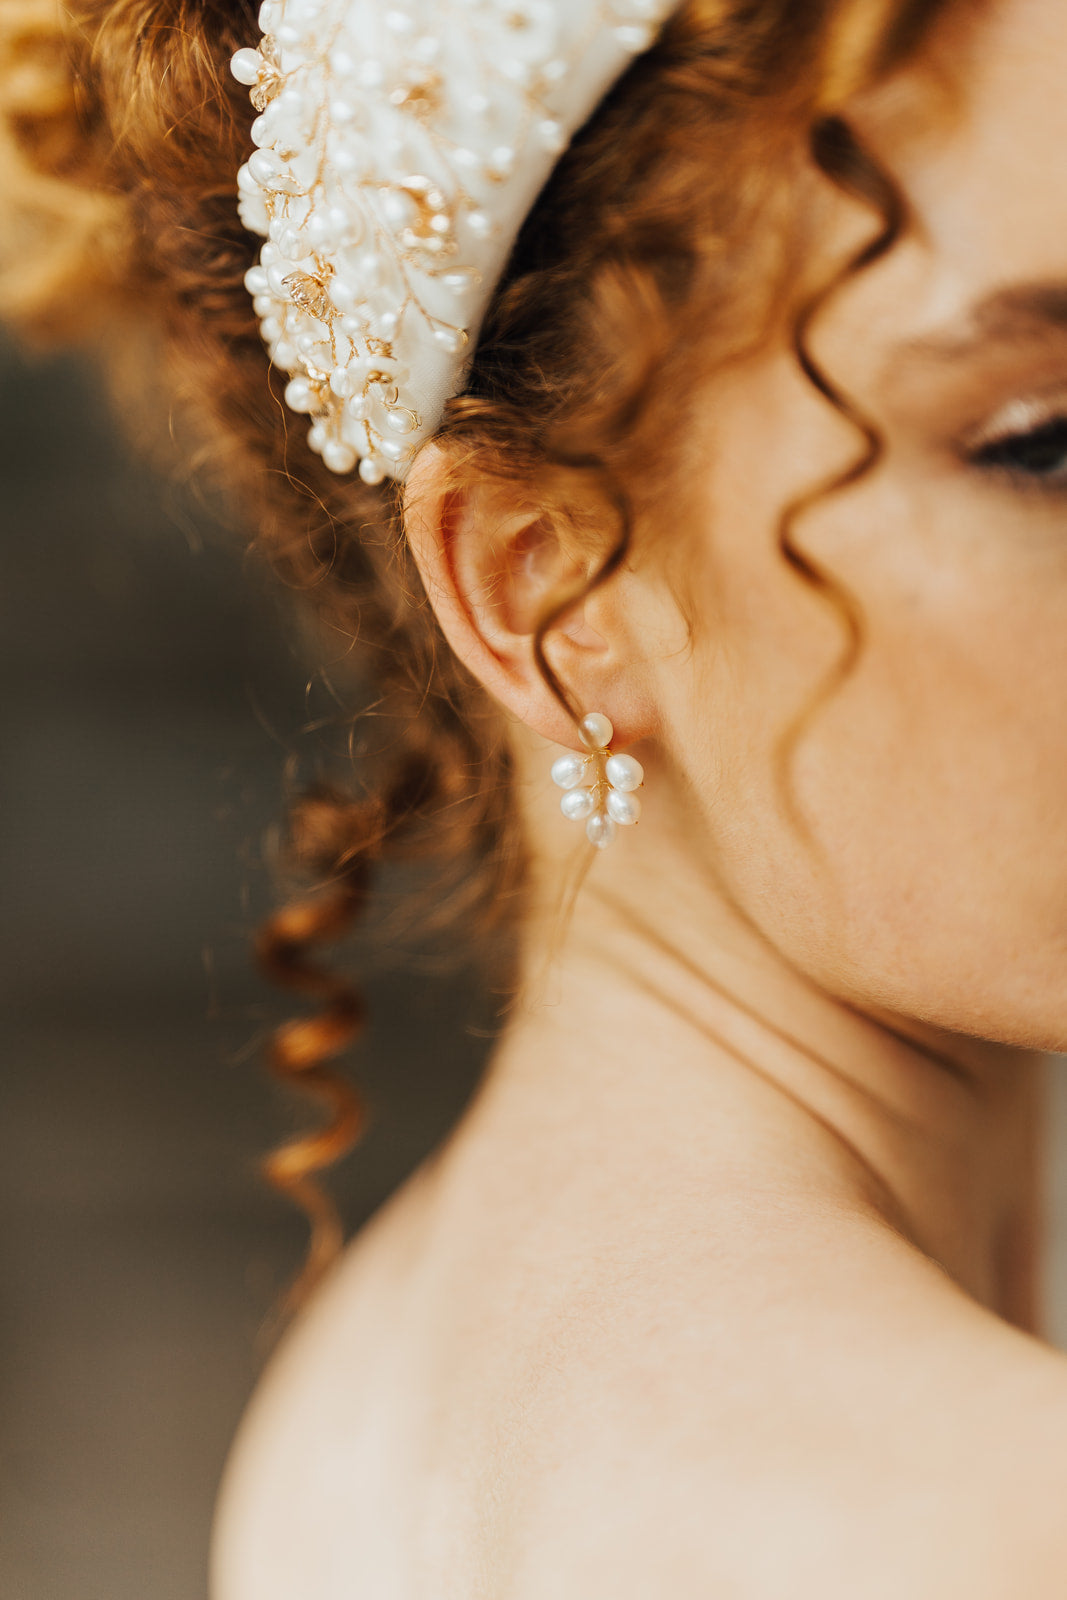 Kensington Grande Pearl Earrings - Gold